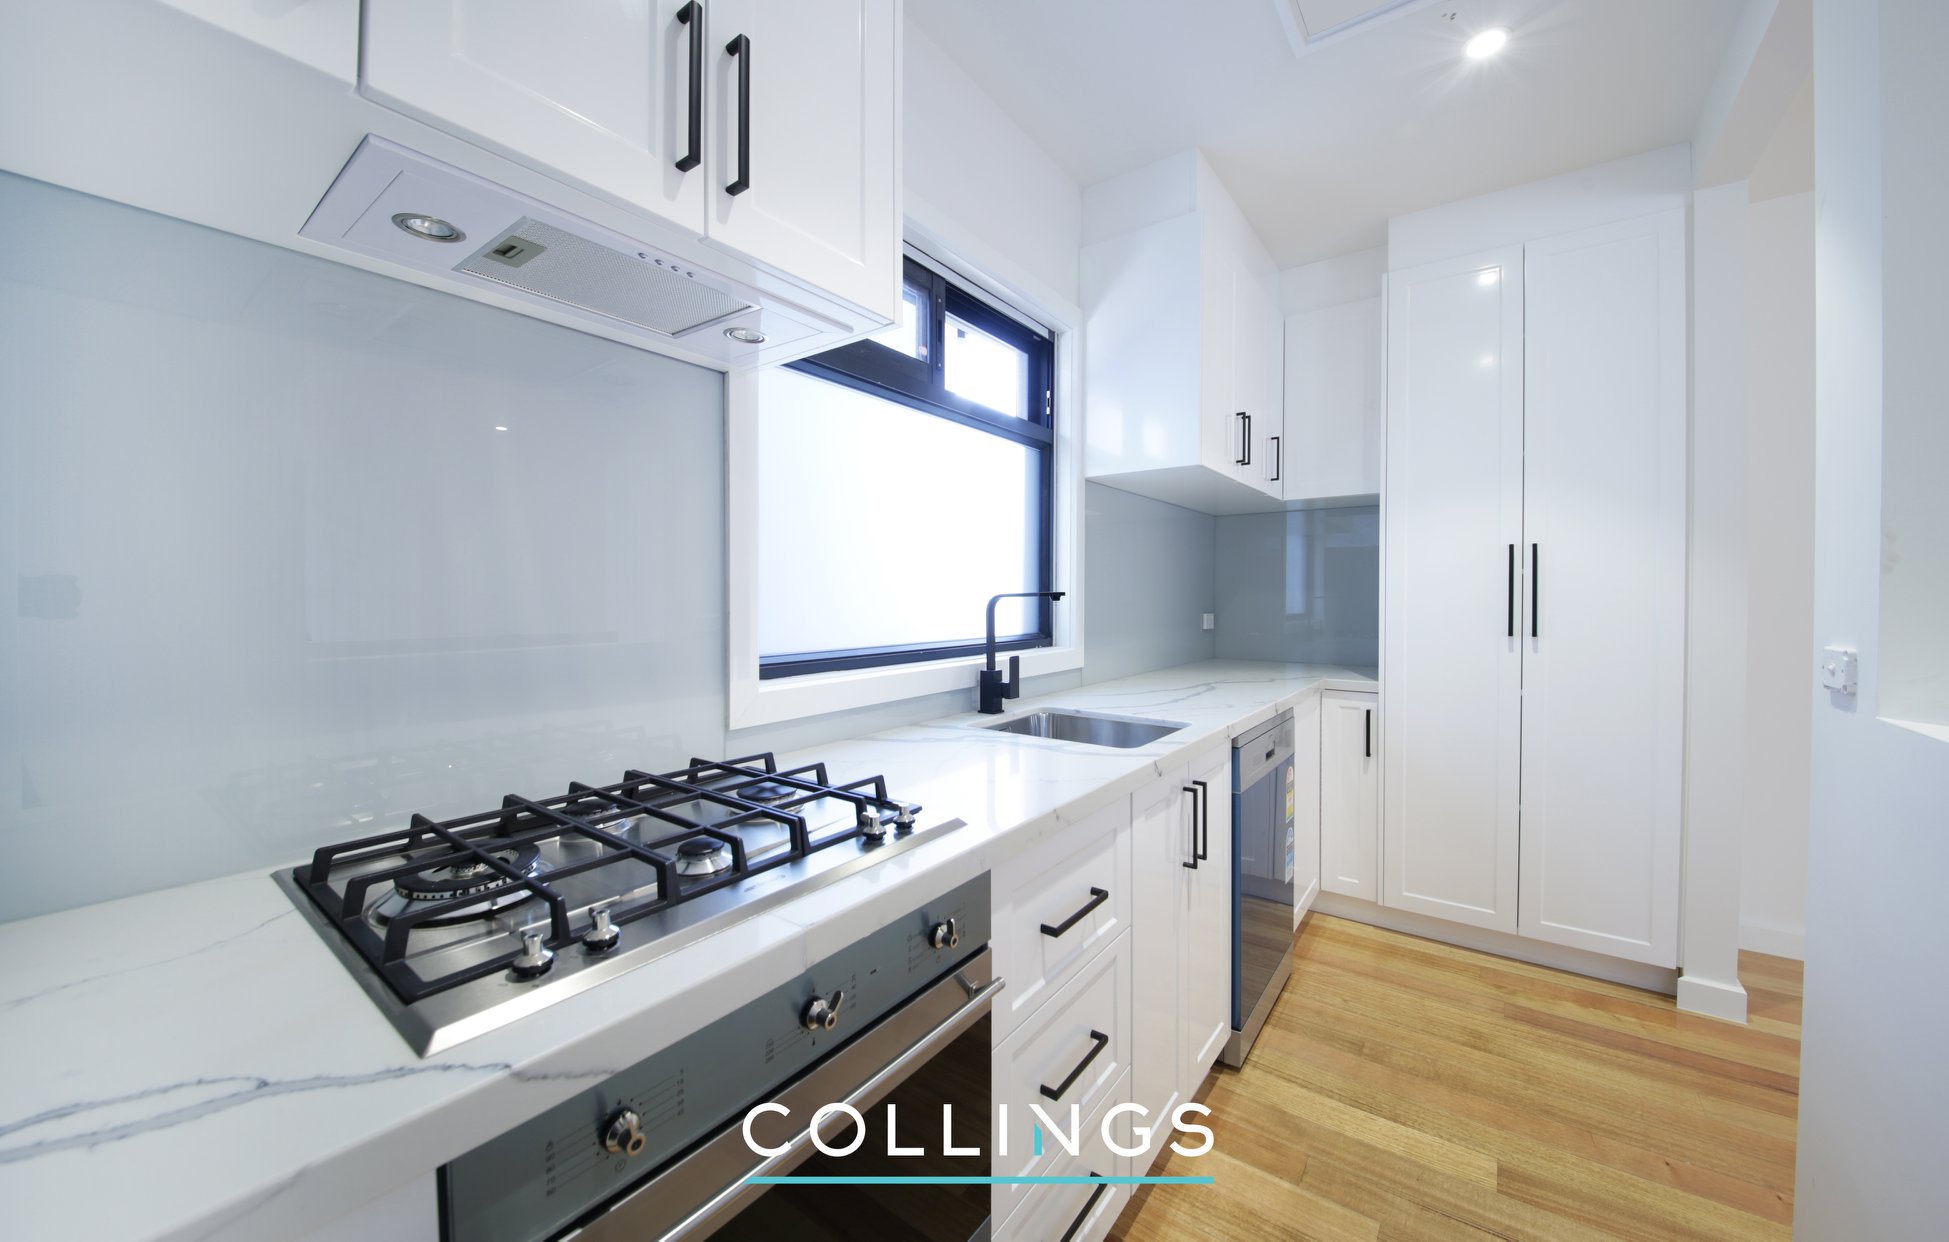 Collings Real Estate Northcote | 2/405 High Street, Northcote, Victoria 3070 | +61 3 9486 2000